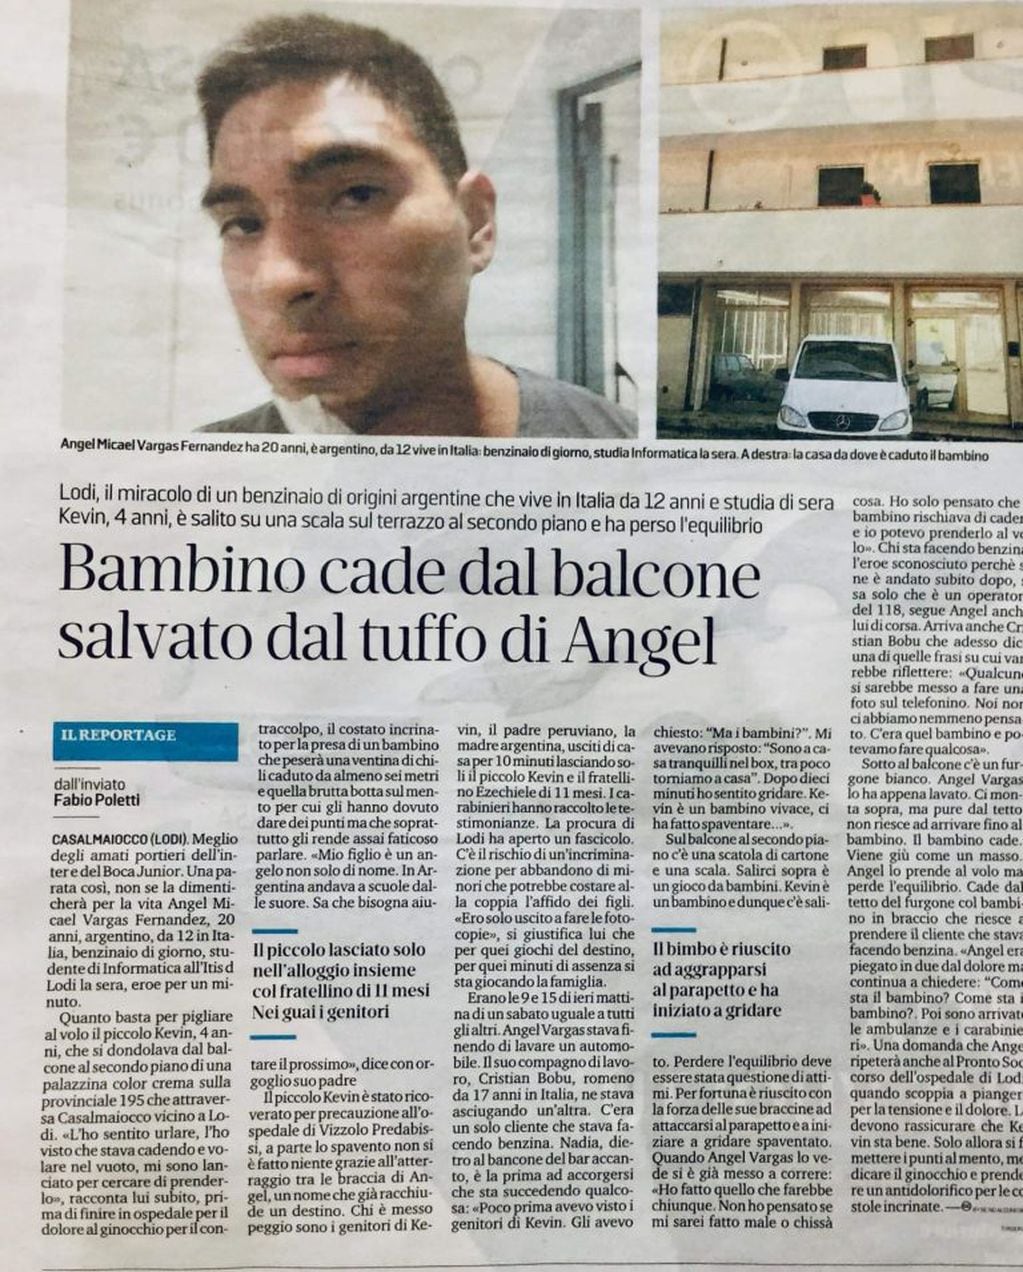 Es cordobés el joven que se convirtió en héroe en Italia al salvar a un niño que cayó de un balcón.